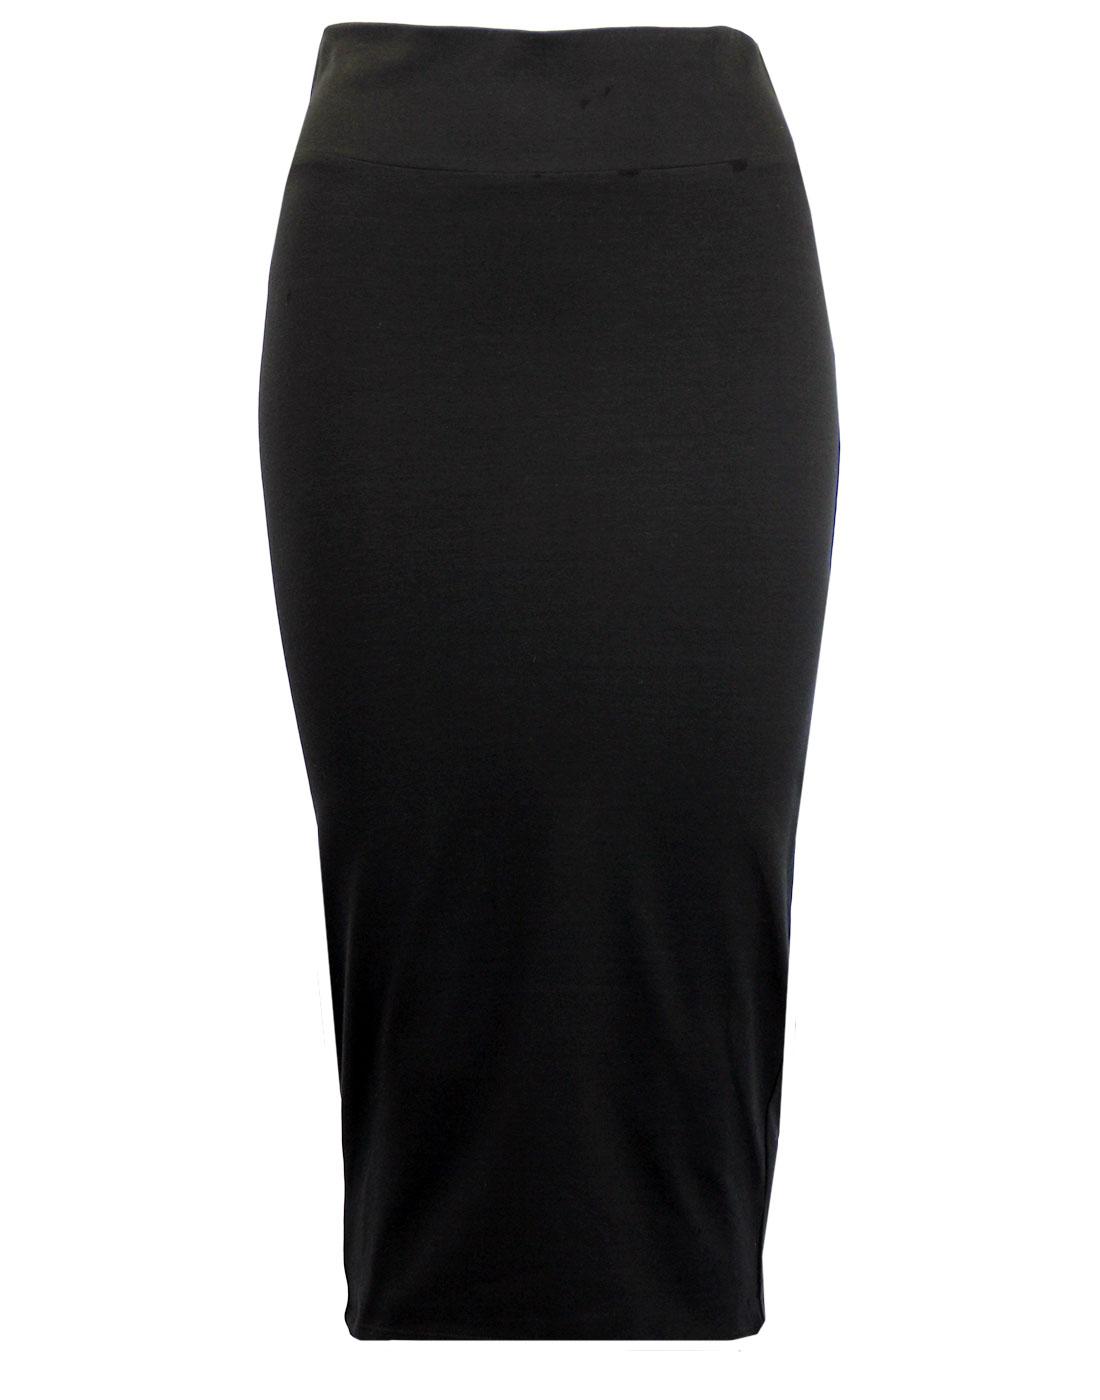 eUKalyptus Retro 1950s Style Pencil Skirt in Black